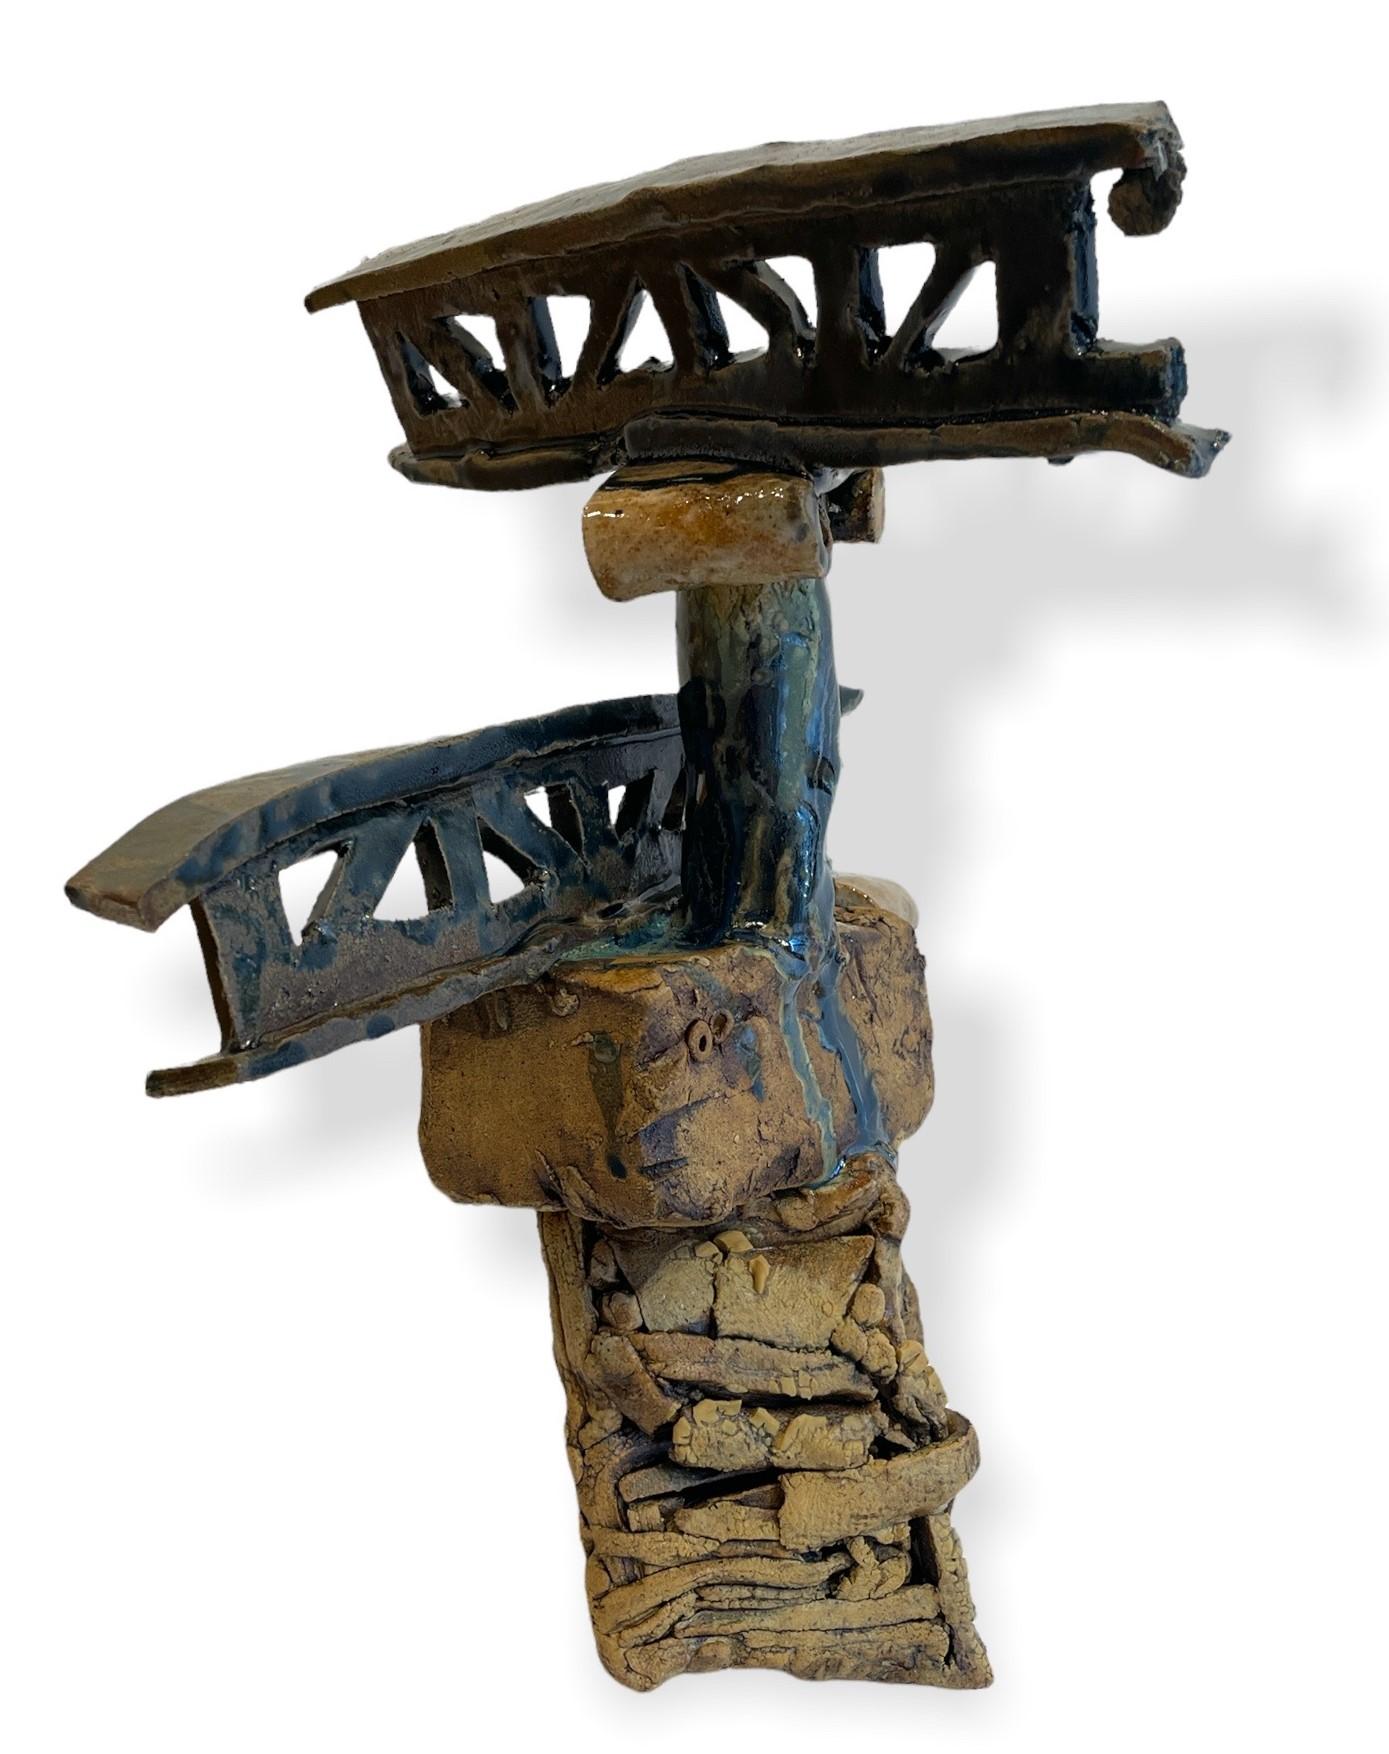 Industrial Hand Built Earthenware Sculpture with Ionic Columns & Bridge Girders, Drip Glaze